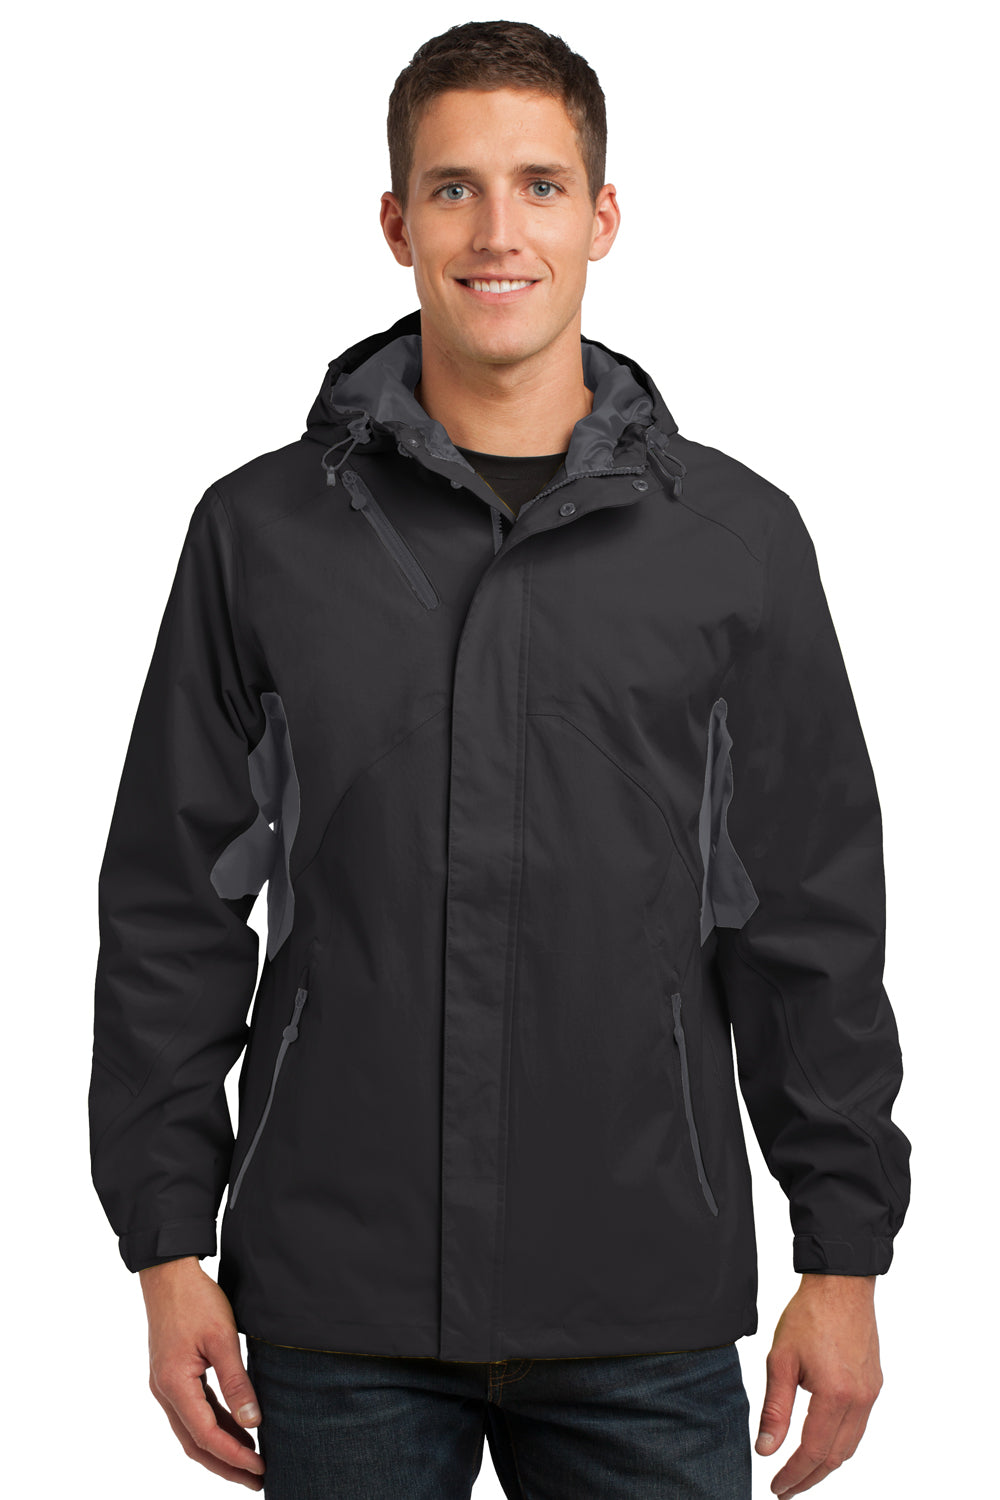 Port Authority J322 Mens Cascade Waterproof Full Zip Hooded Jacket Black/Grey Front